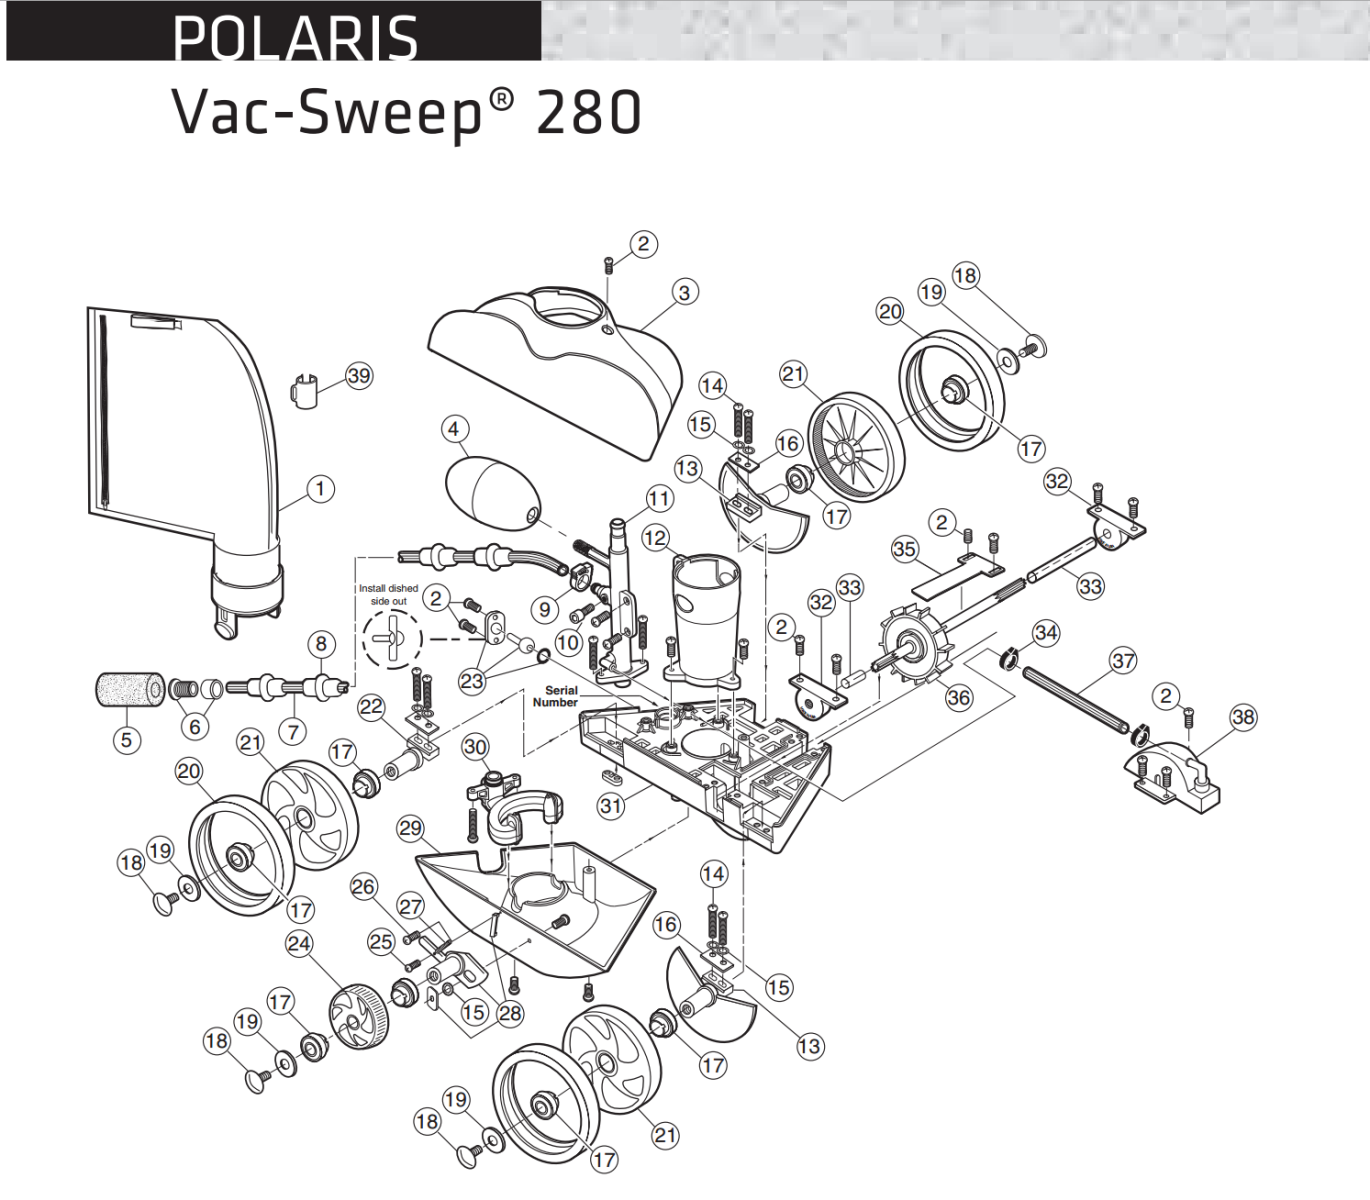 polaris-280-parts.png